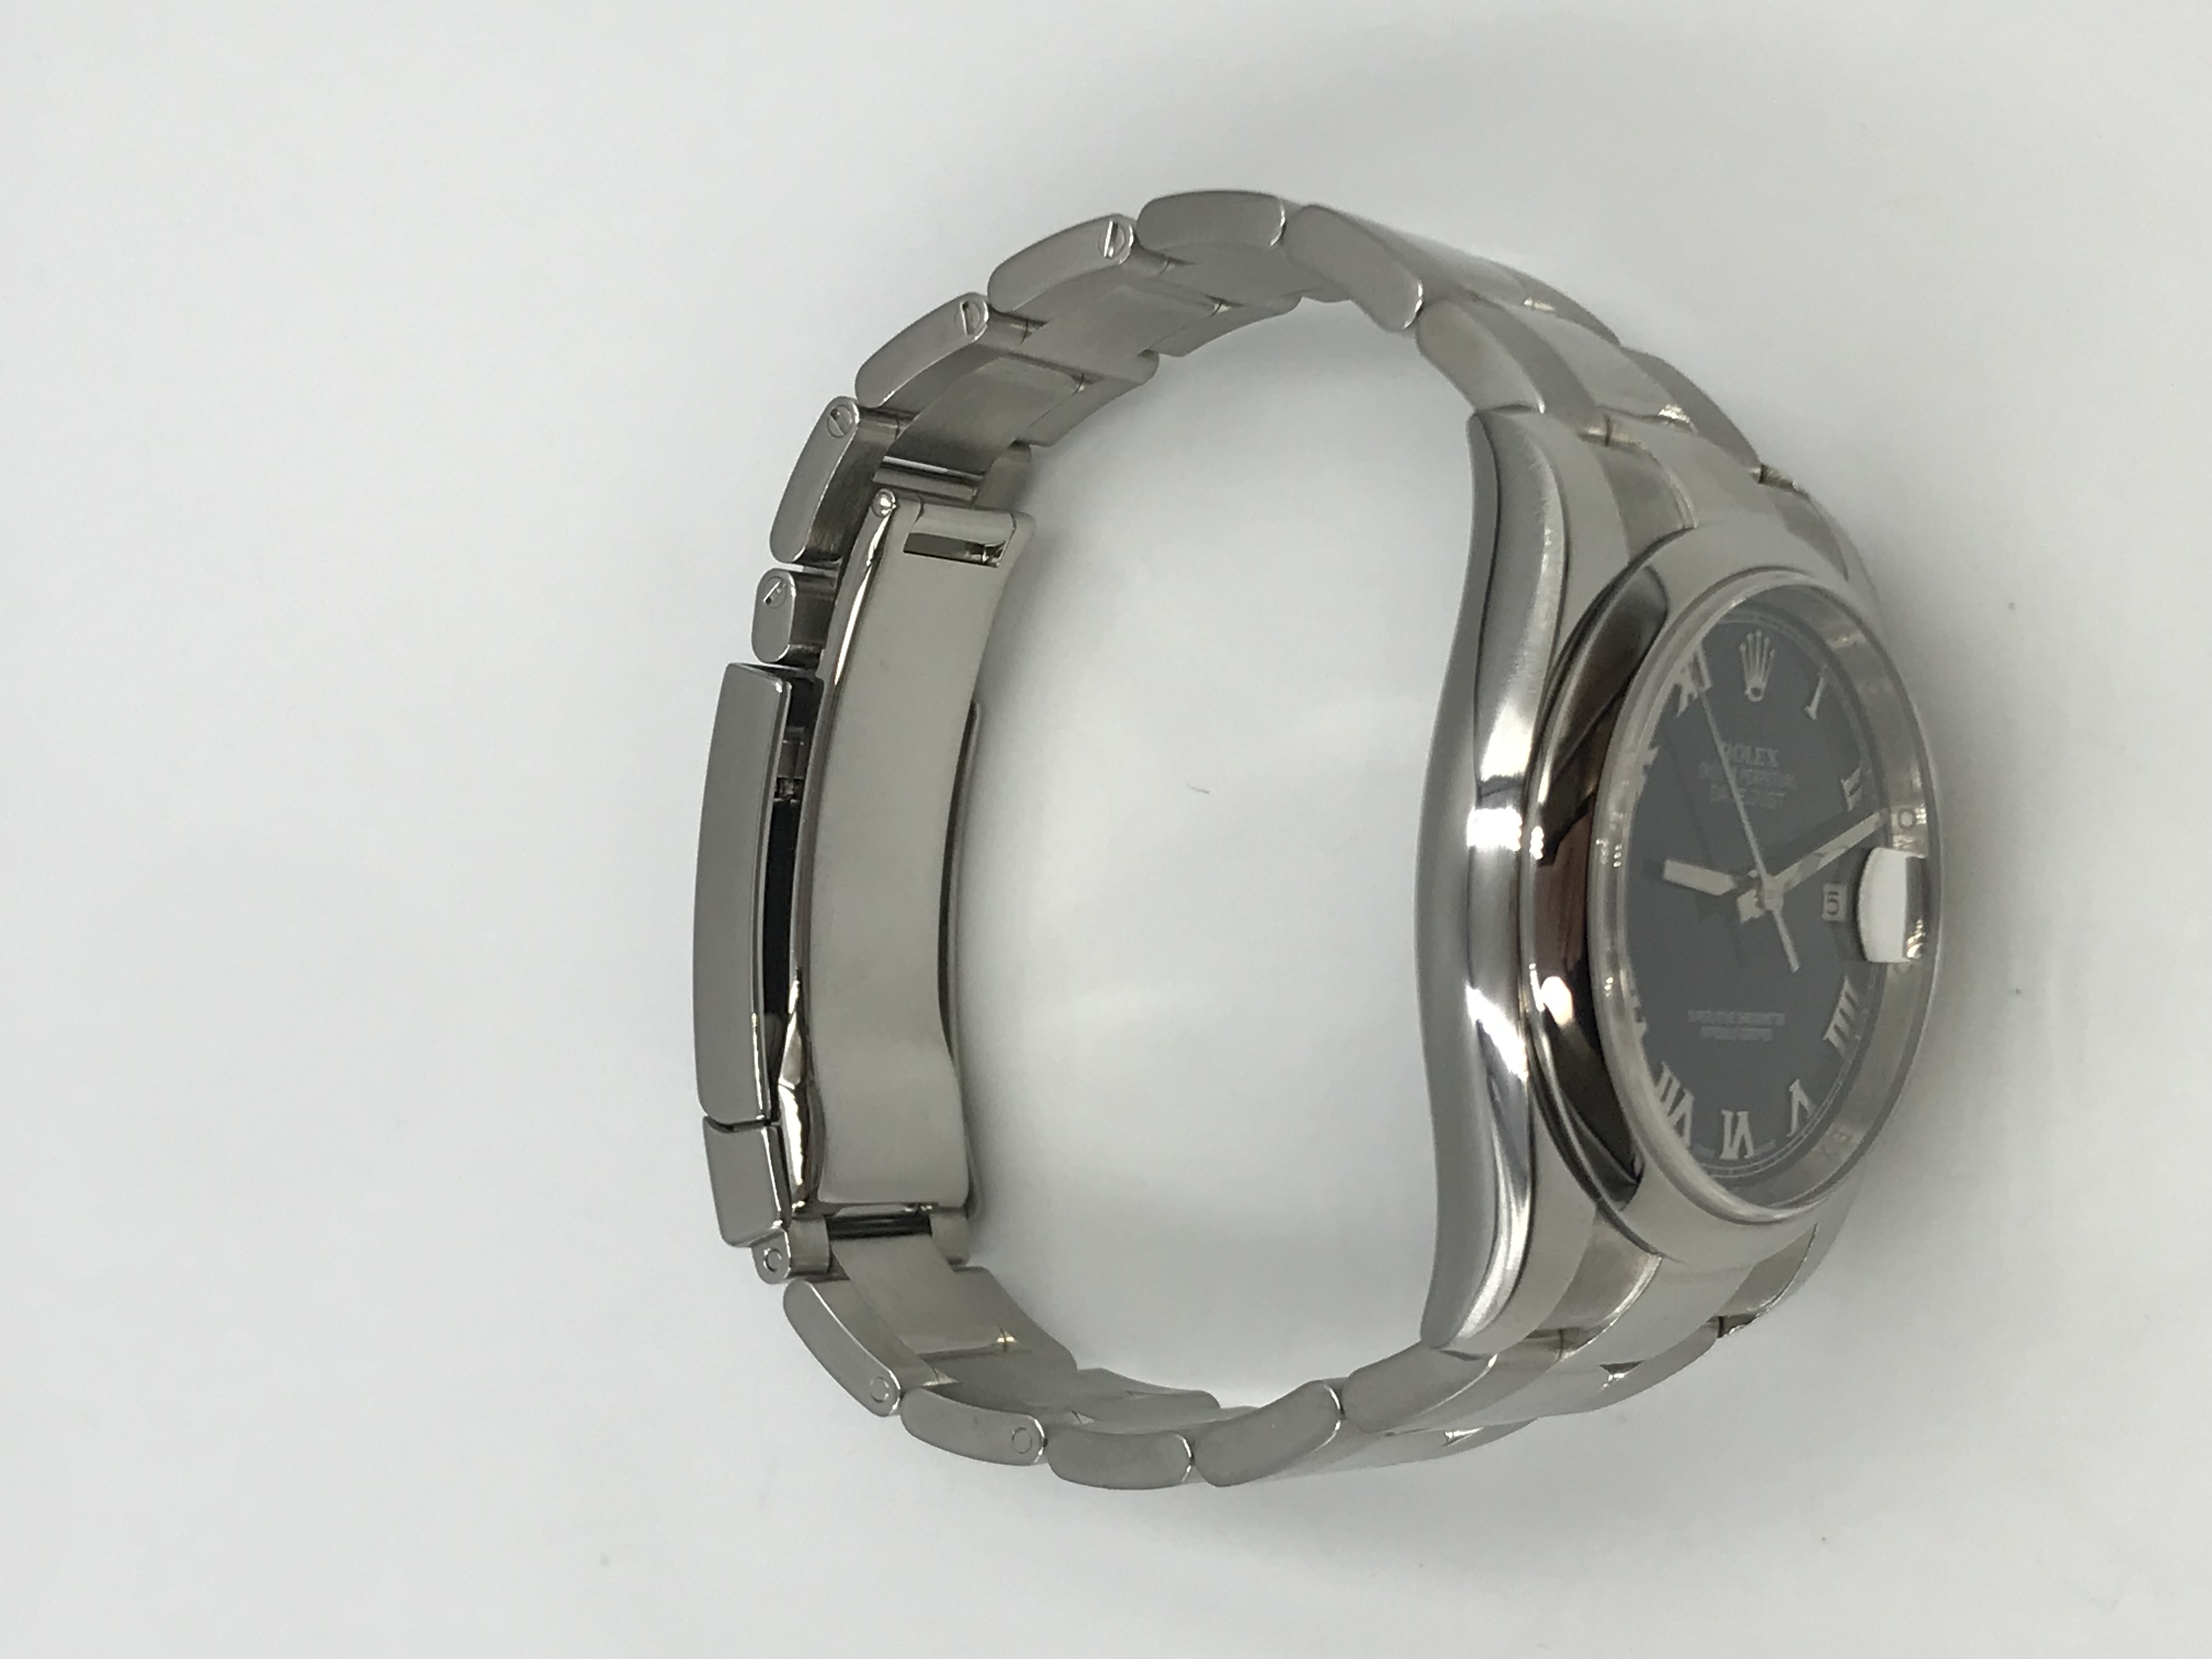 Rolex  DateJust 36 mm  Blue Roman Numeral Watch 